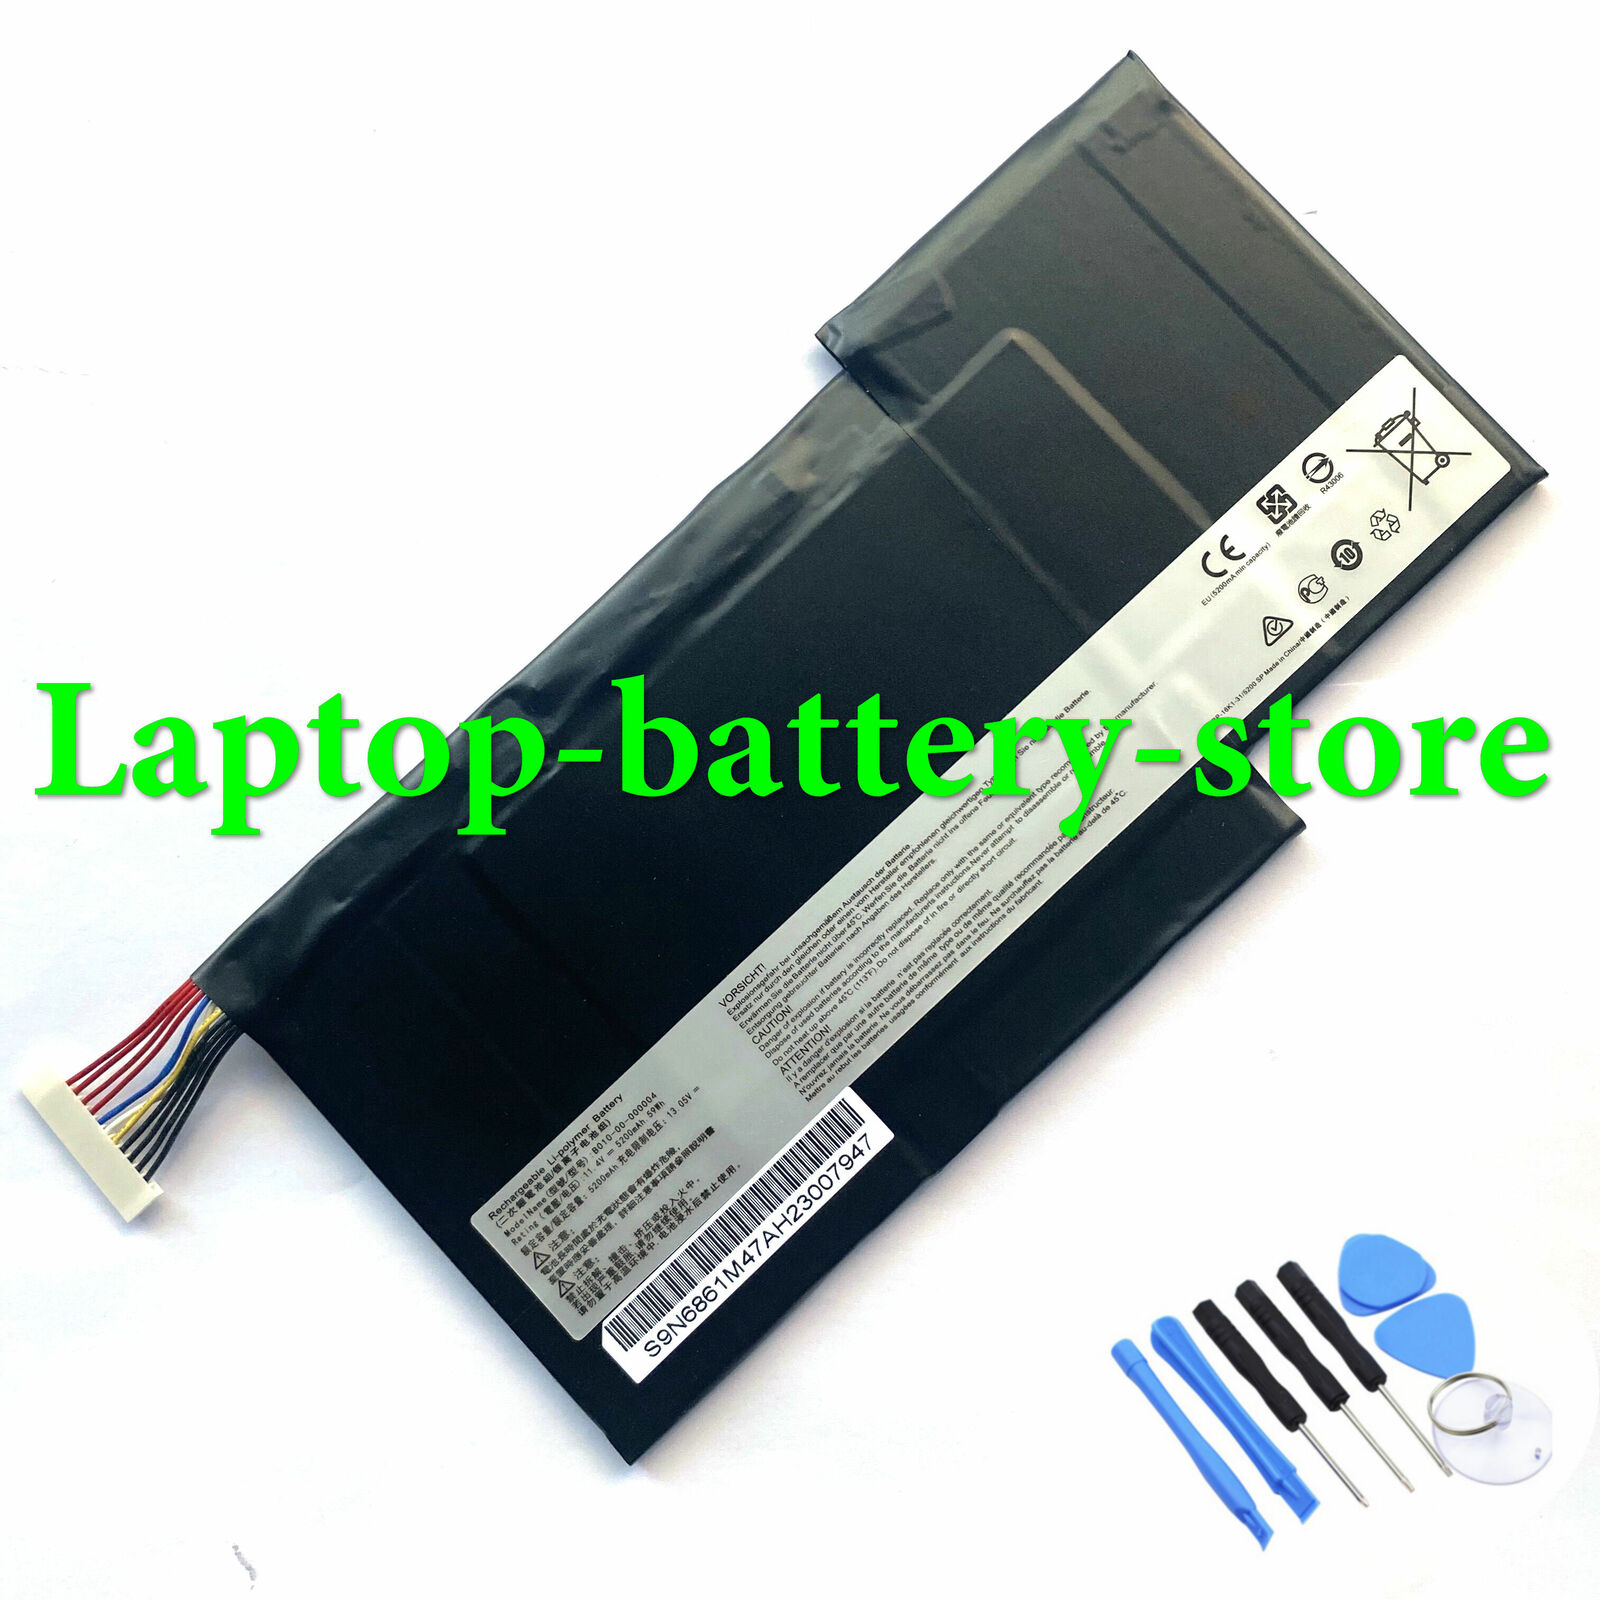 New B010-00-000004 Battery For Getac Evga SC15 Laptop